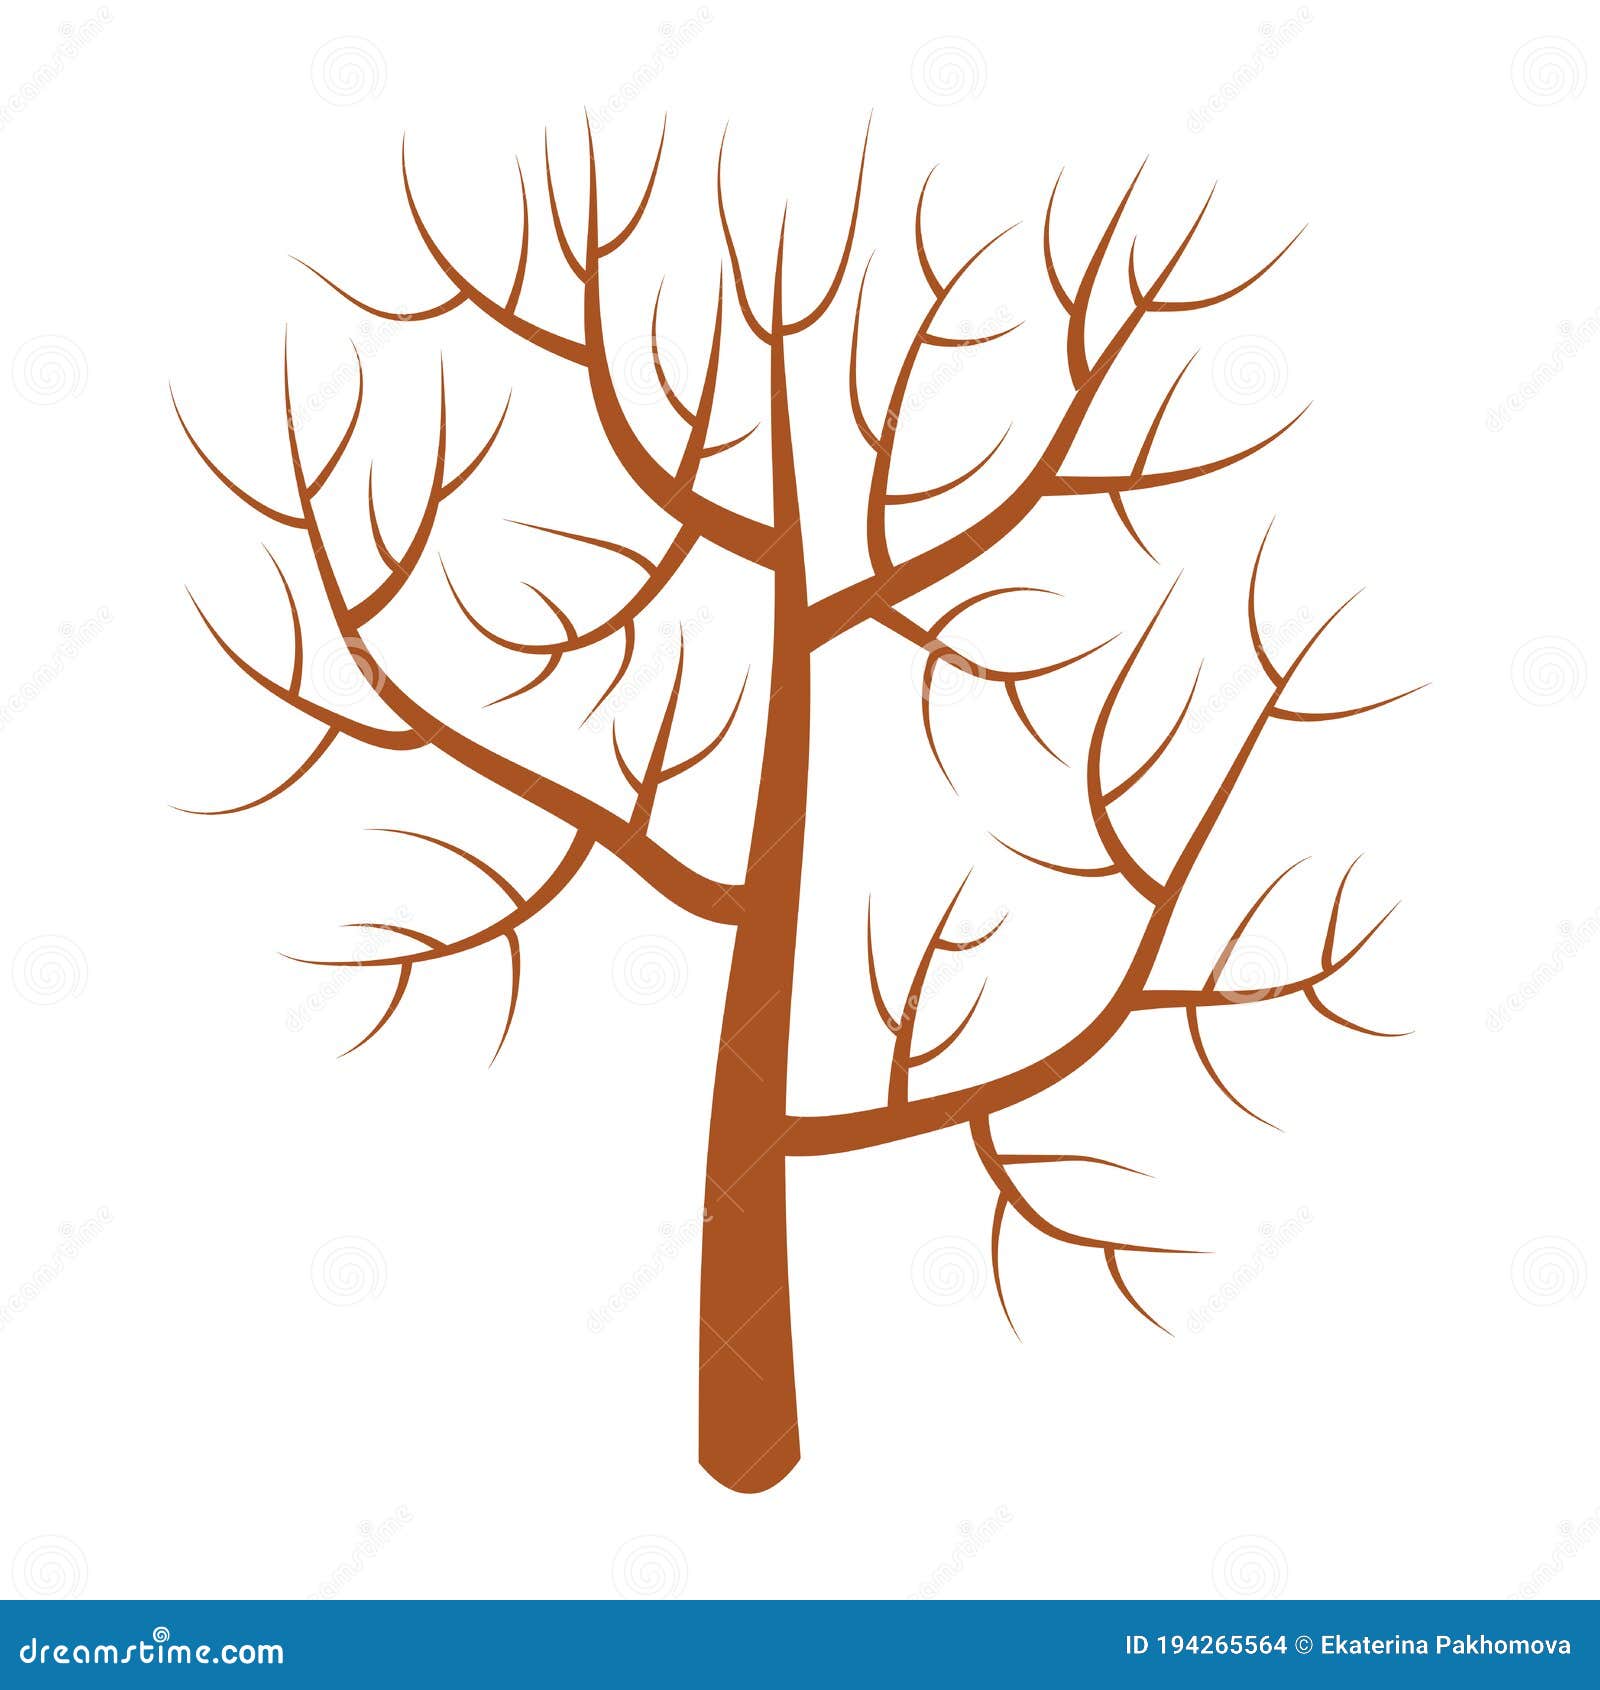 Download Vector Single Cartoon Brown Bare Tree | CartoonDealer.com ...